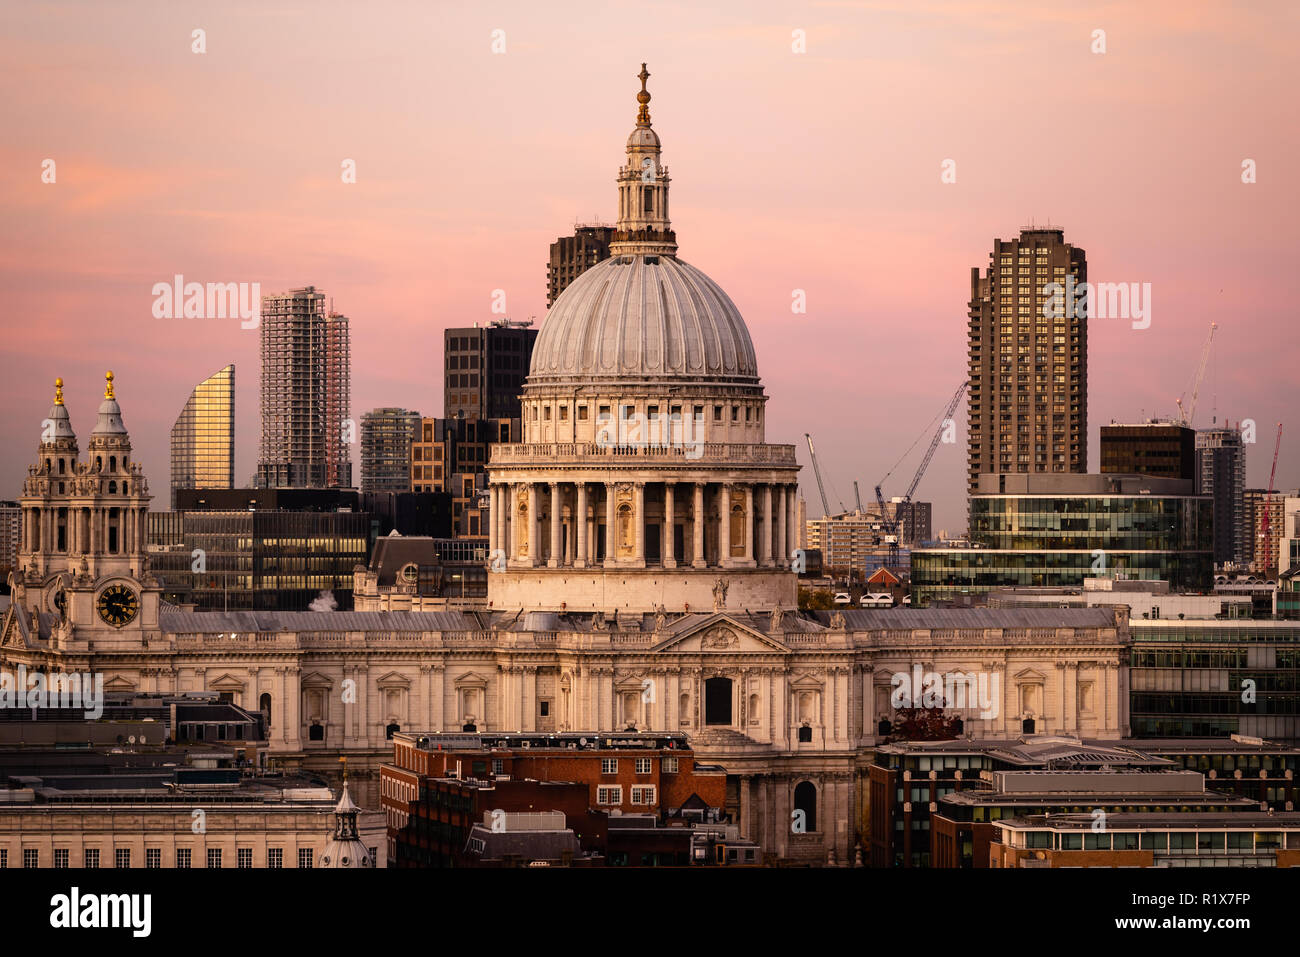 London Skyline with a Pink Sky Stock Photo